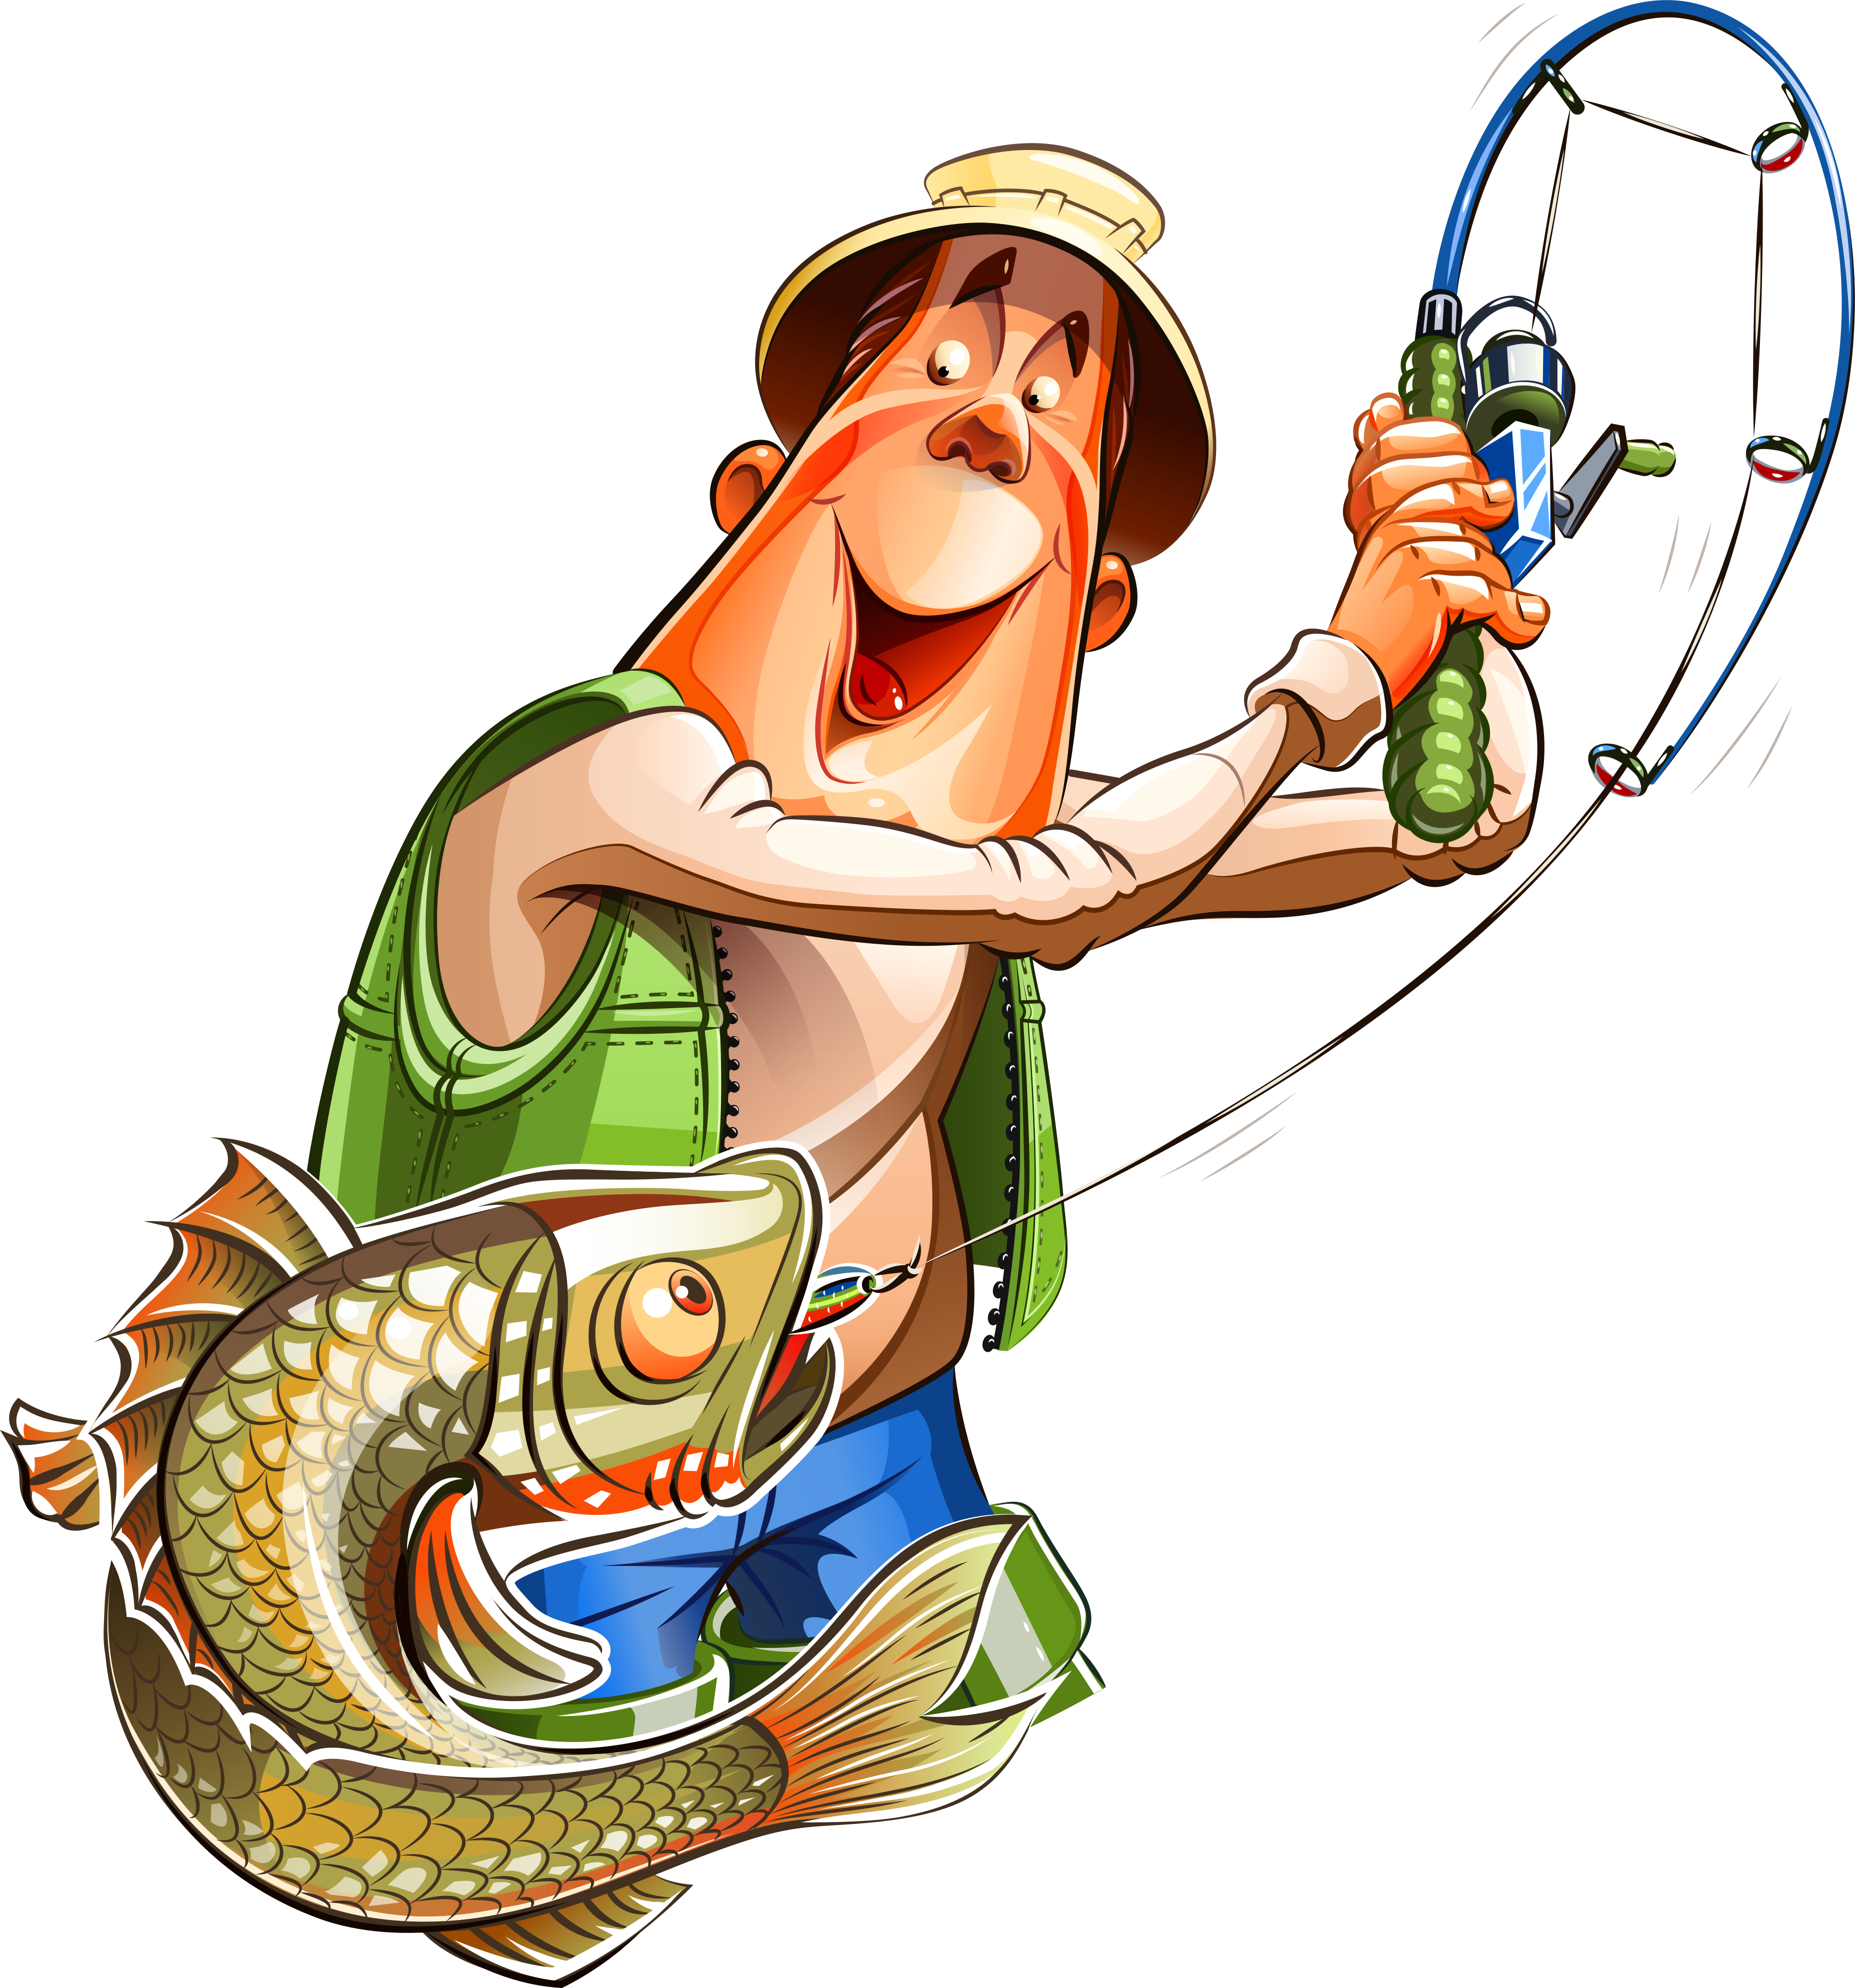 Мужик поймал рыбу. Рыбак с удочкой. Рыбак с удочкой и рыбой. Рыбак рисунок. Рыбак мультяшный.